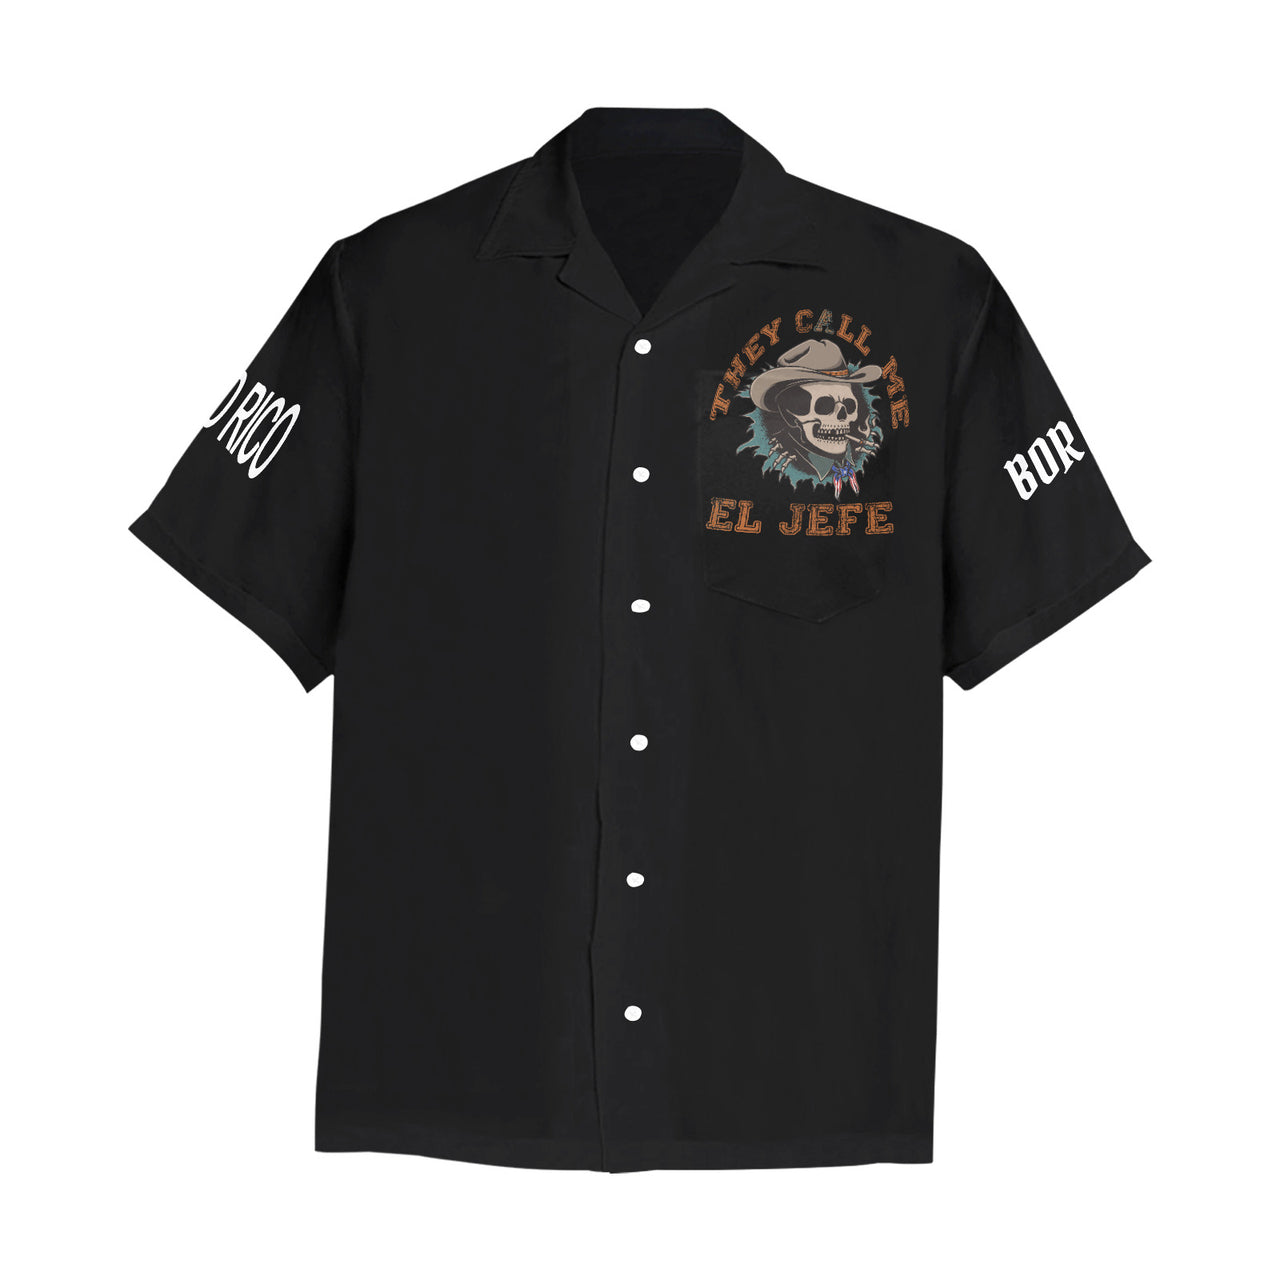 El Jefe Boricua Men's All Over Print Hawaiian Shirt With Chest Pocket